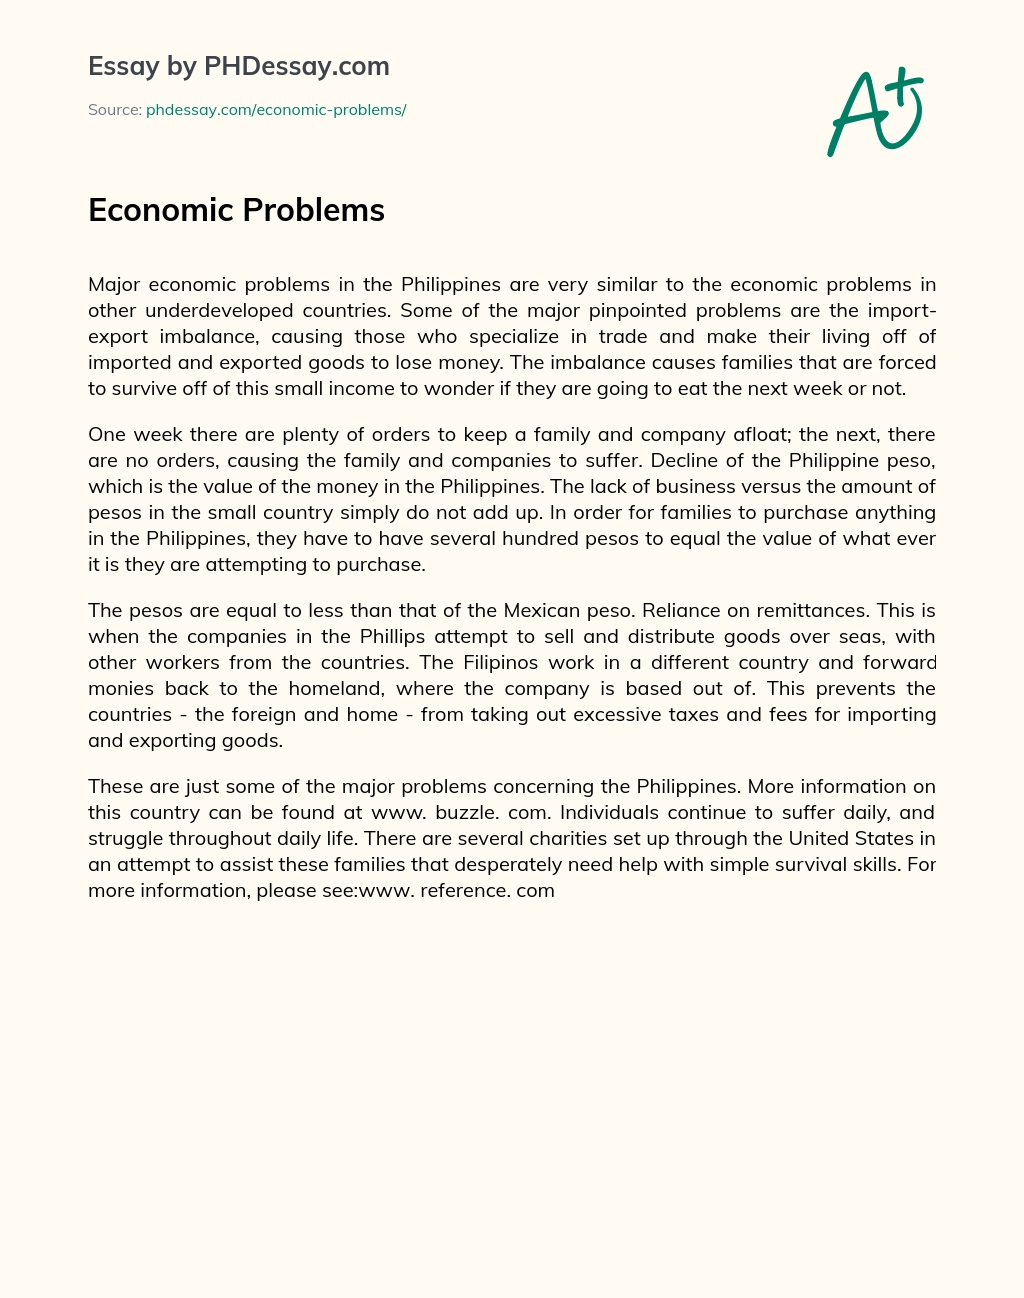 Economic Problems essay